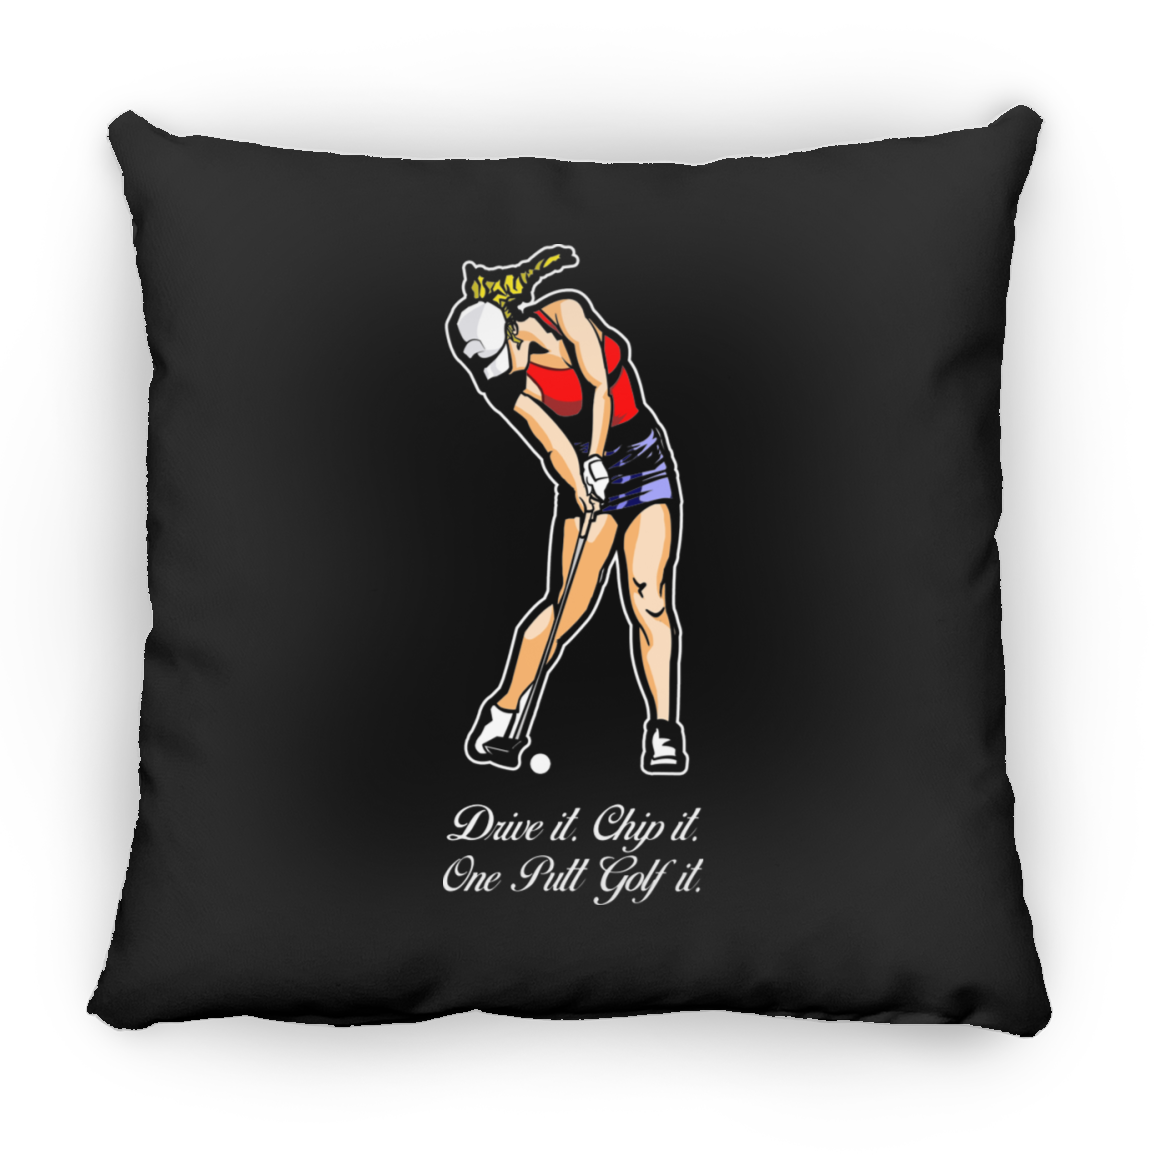 OPG Custom Design #9. Drive it. Chip it. One Putt Golf it. Square Pillow 18x18